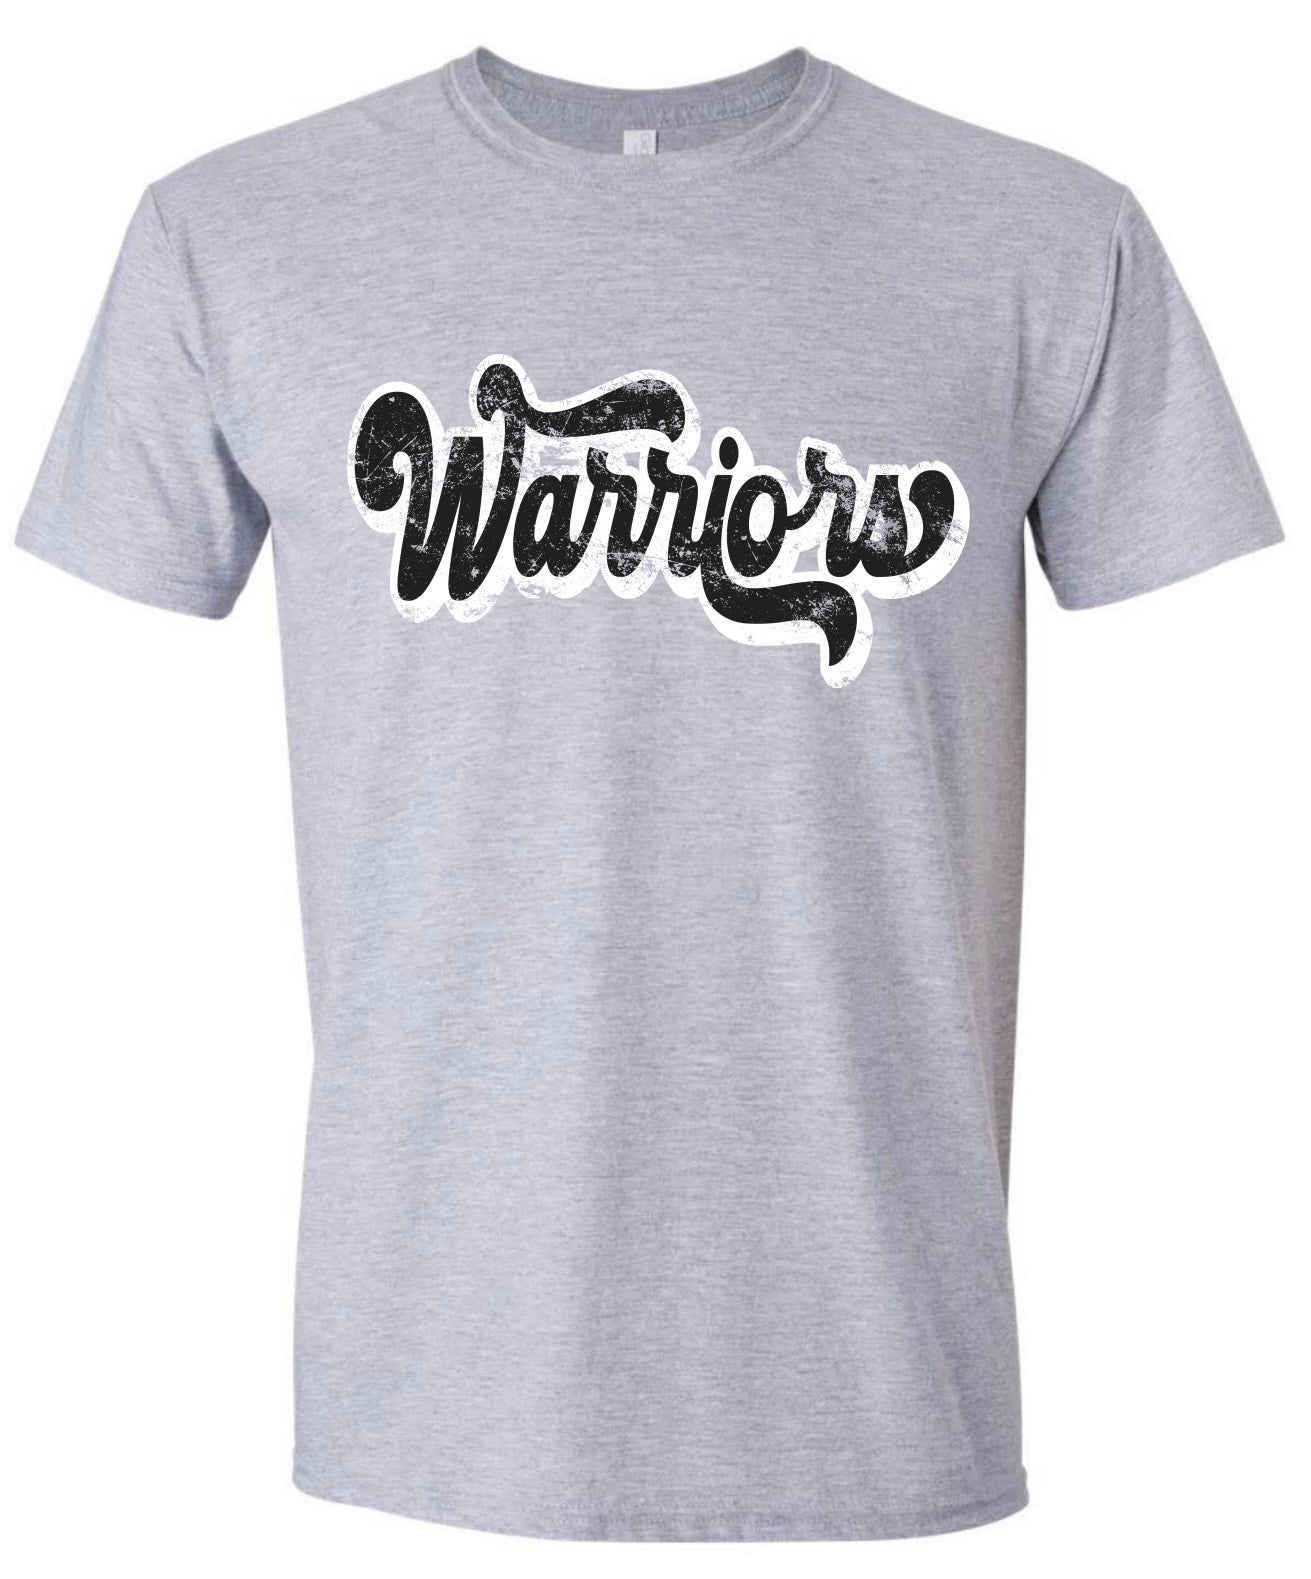 Distressed Warriors Flair Tshirt